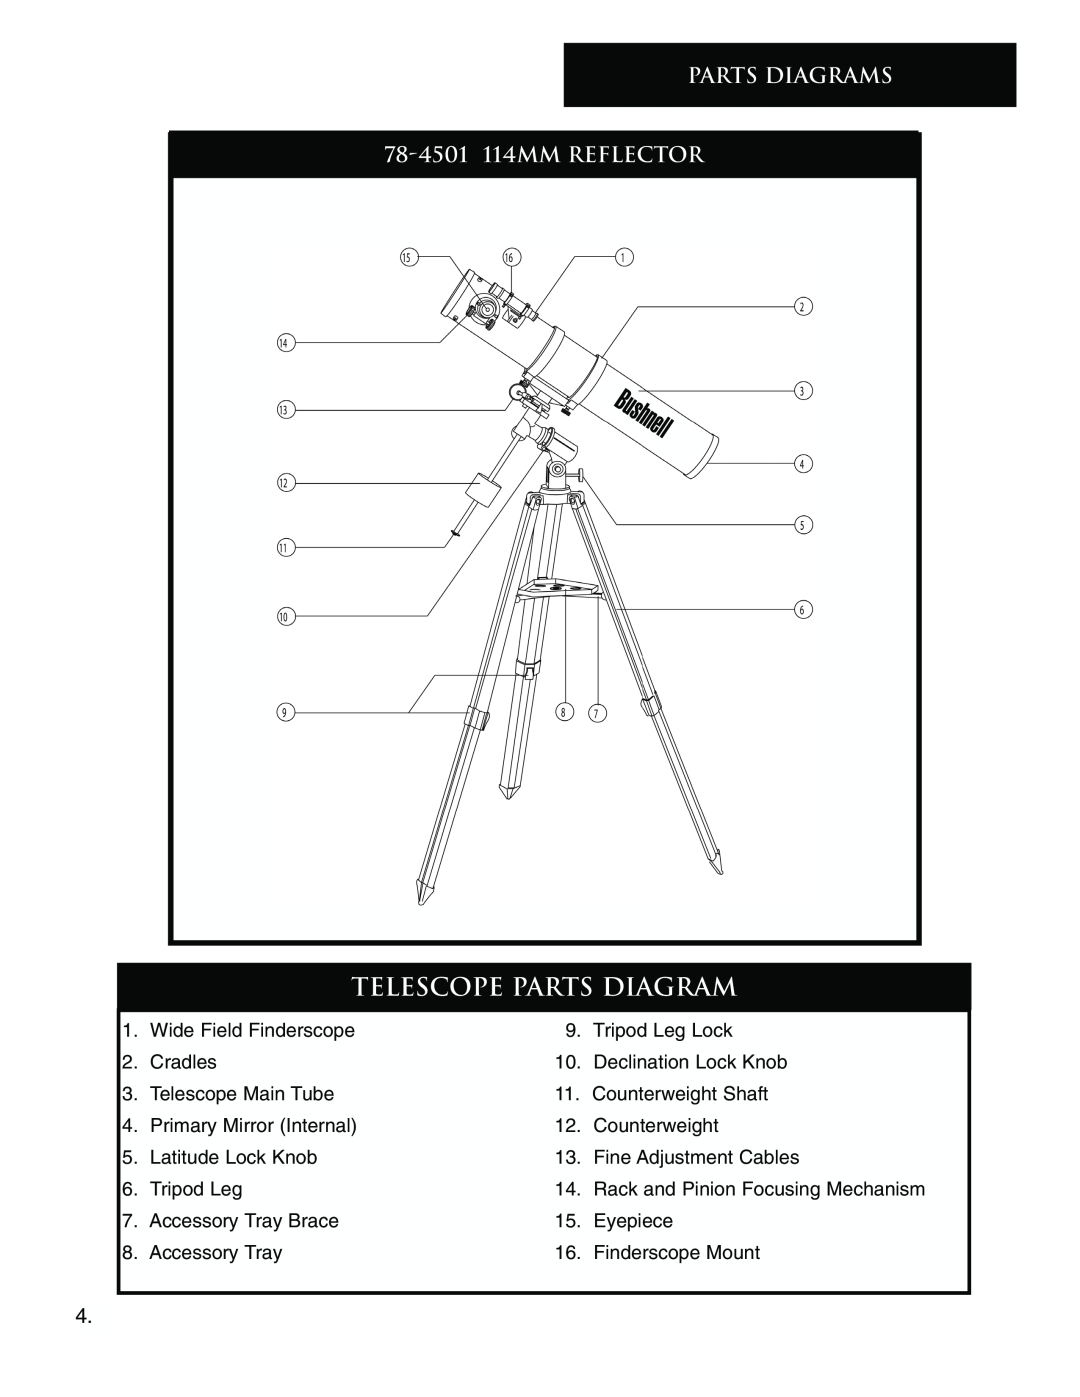 Bushnell instruction manual Parts Diagrams, Telescope Parts Diagram, 78-4501114MM REFLECTOR 